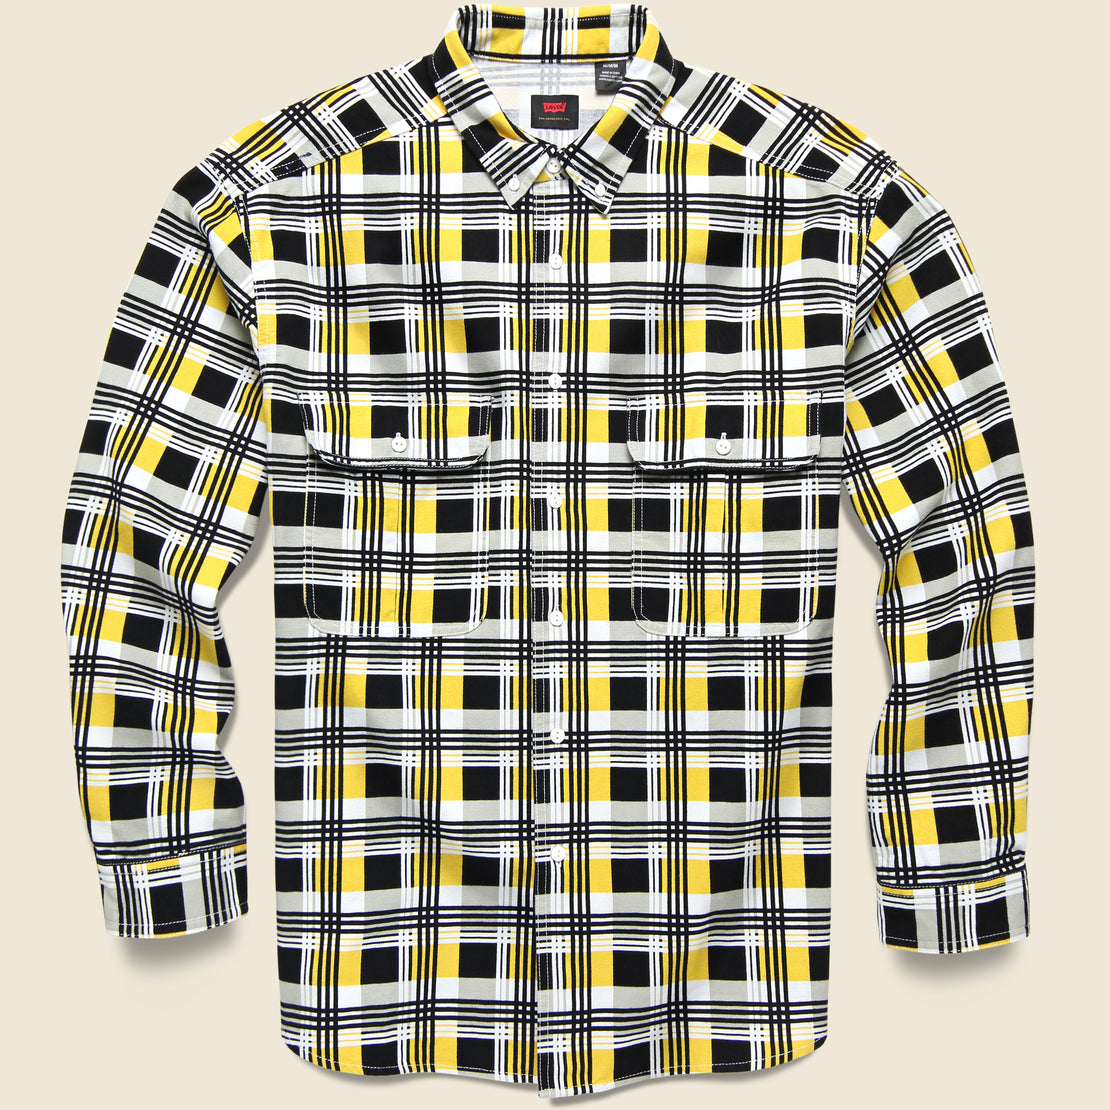 Levis Premium Printed Skate Woven Shirt - Black/Yellow